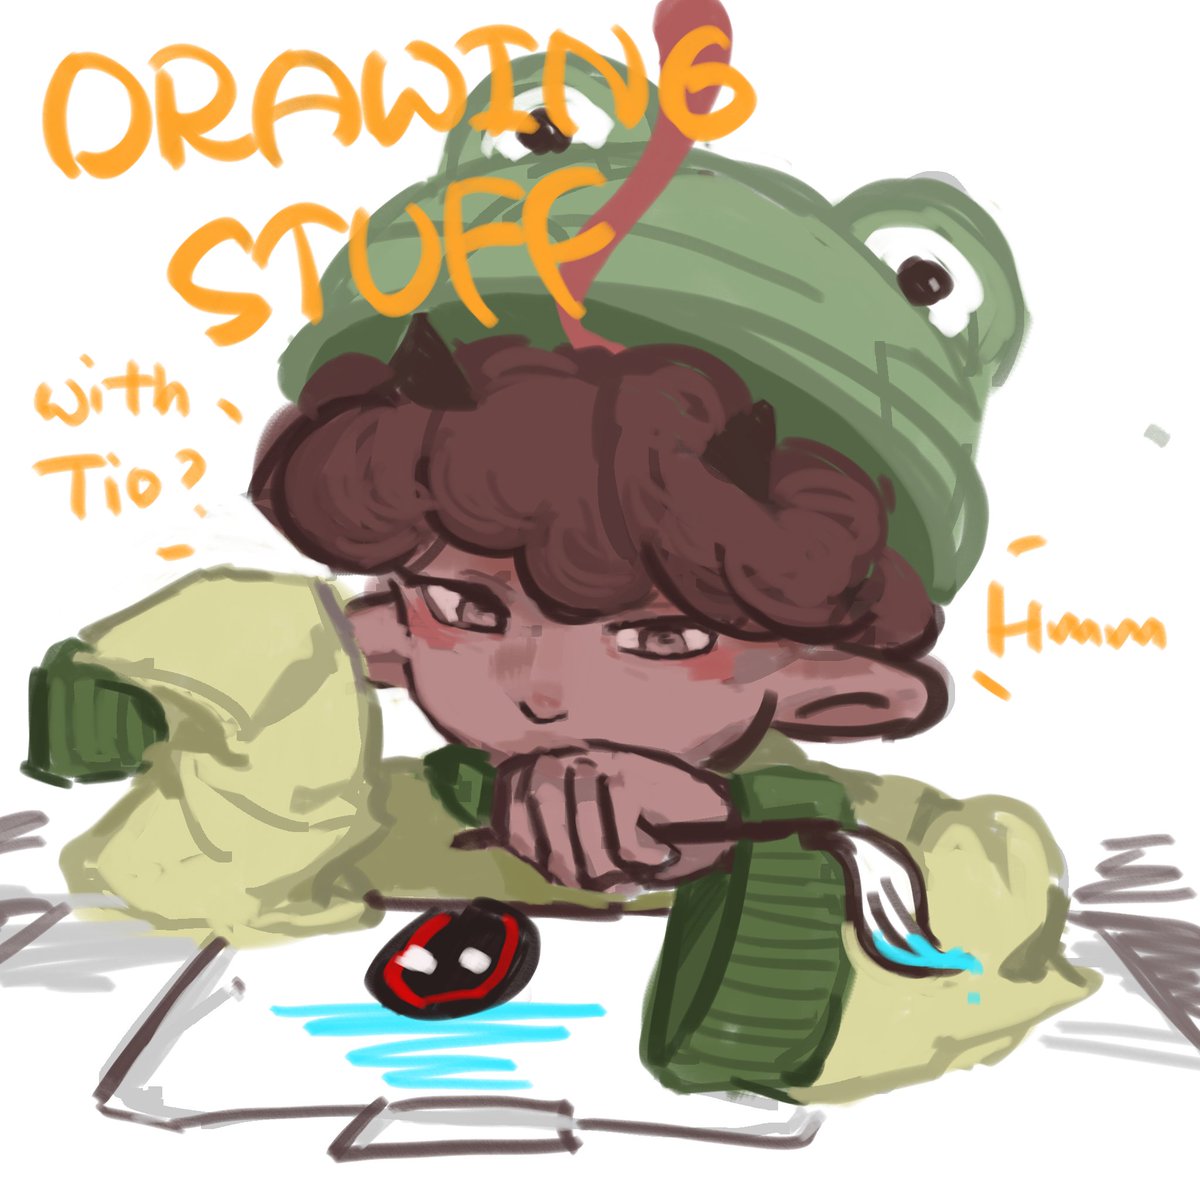 Drawing with tio…… as a frog
#qsmpfanart #richarlysonfanart